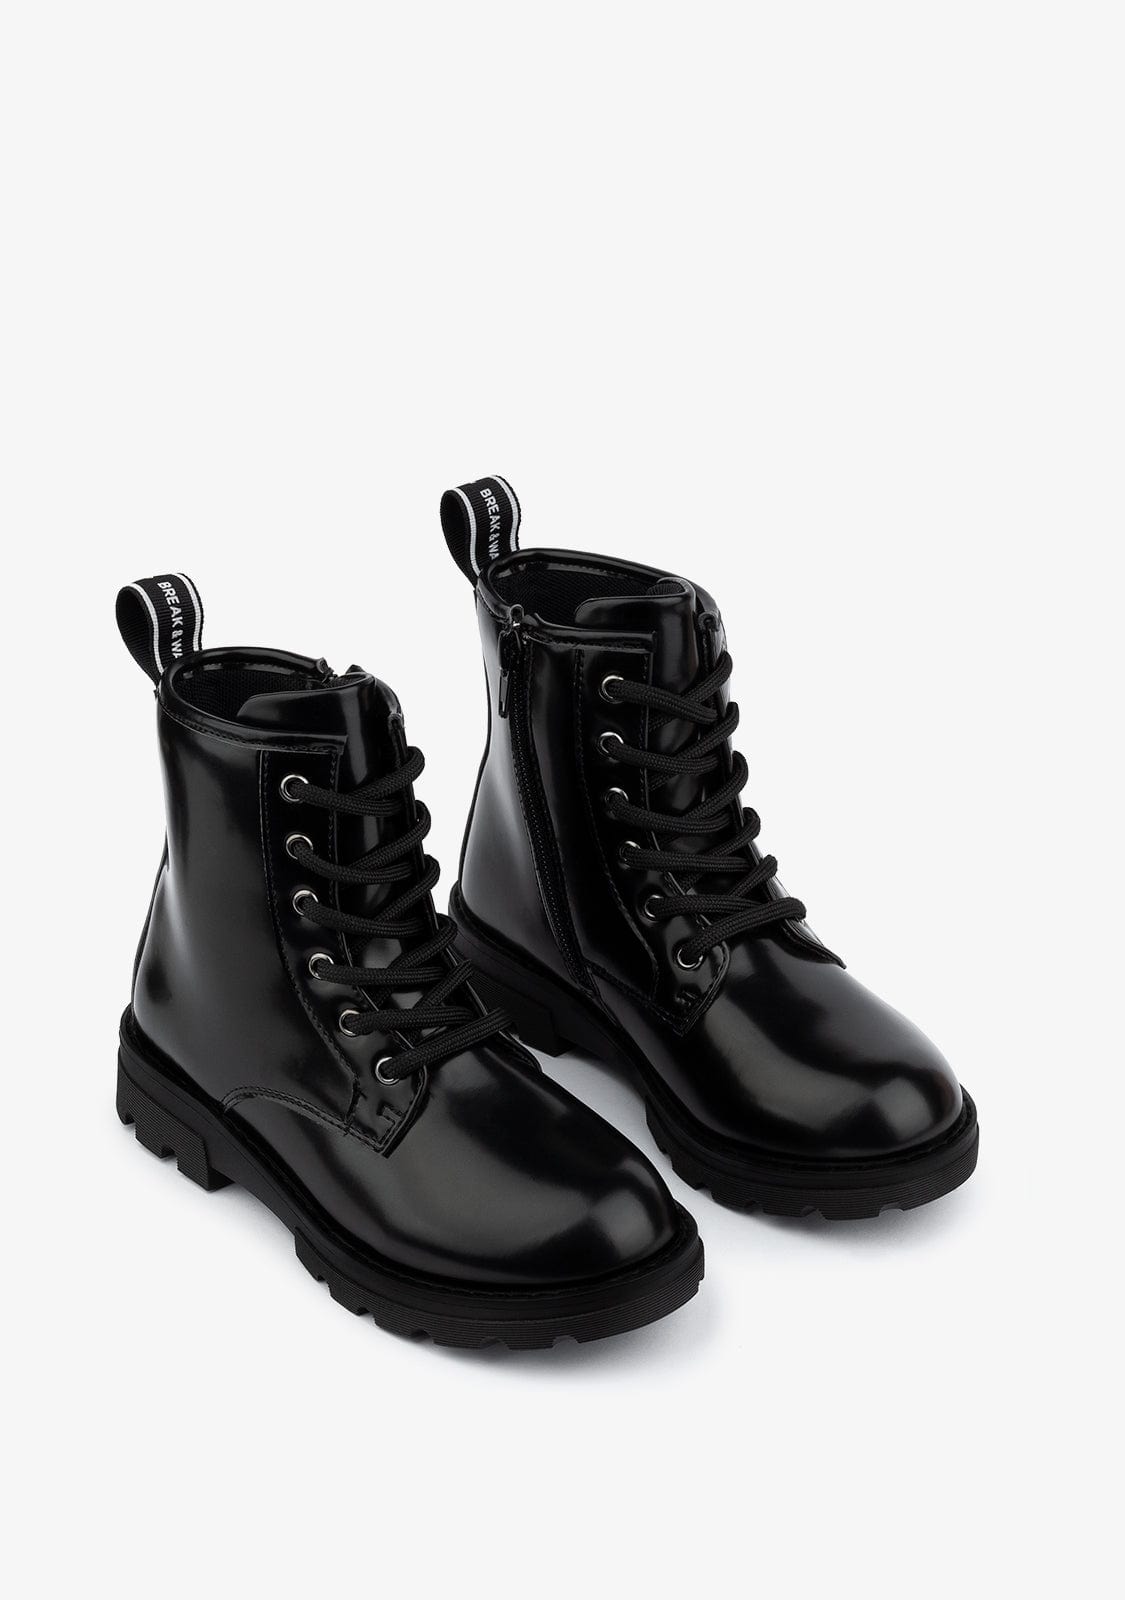 B&W JUNIOR Shoes Girl's Black Military Boots B&W